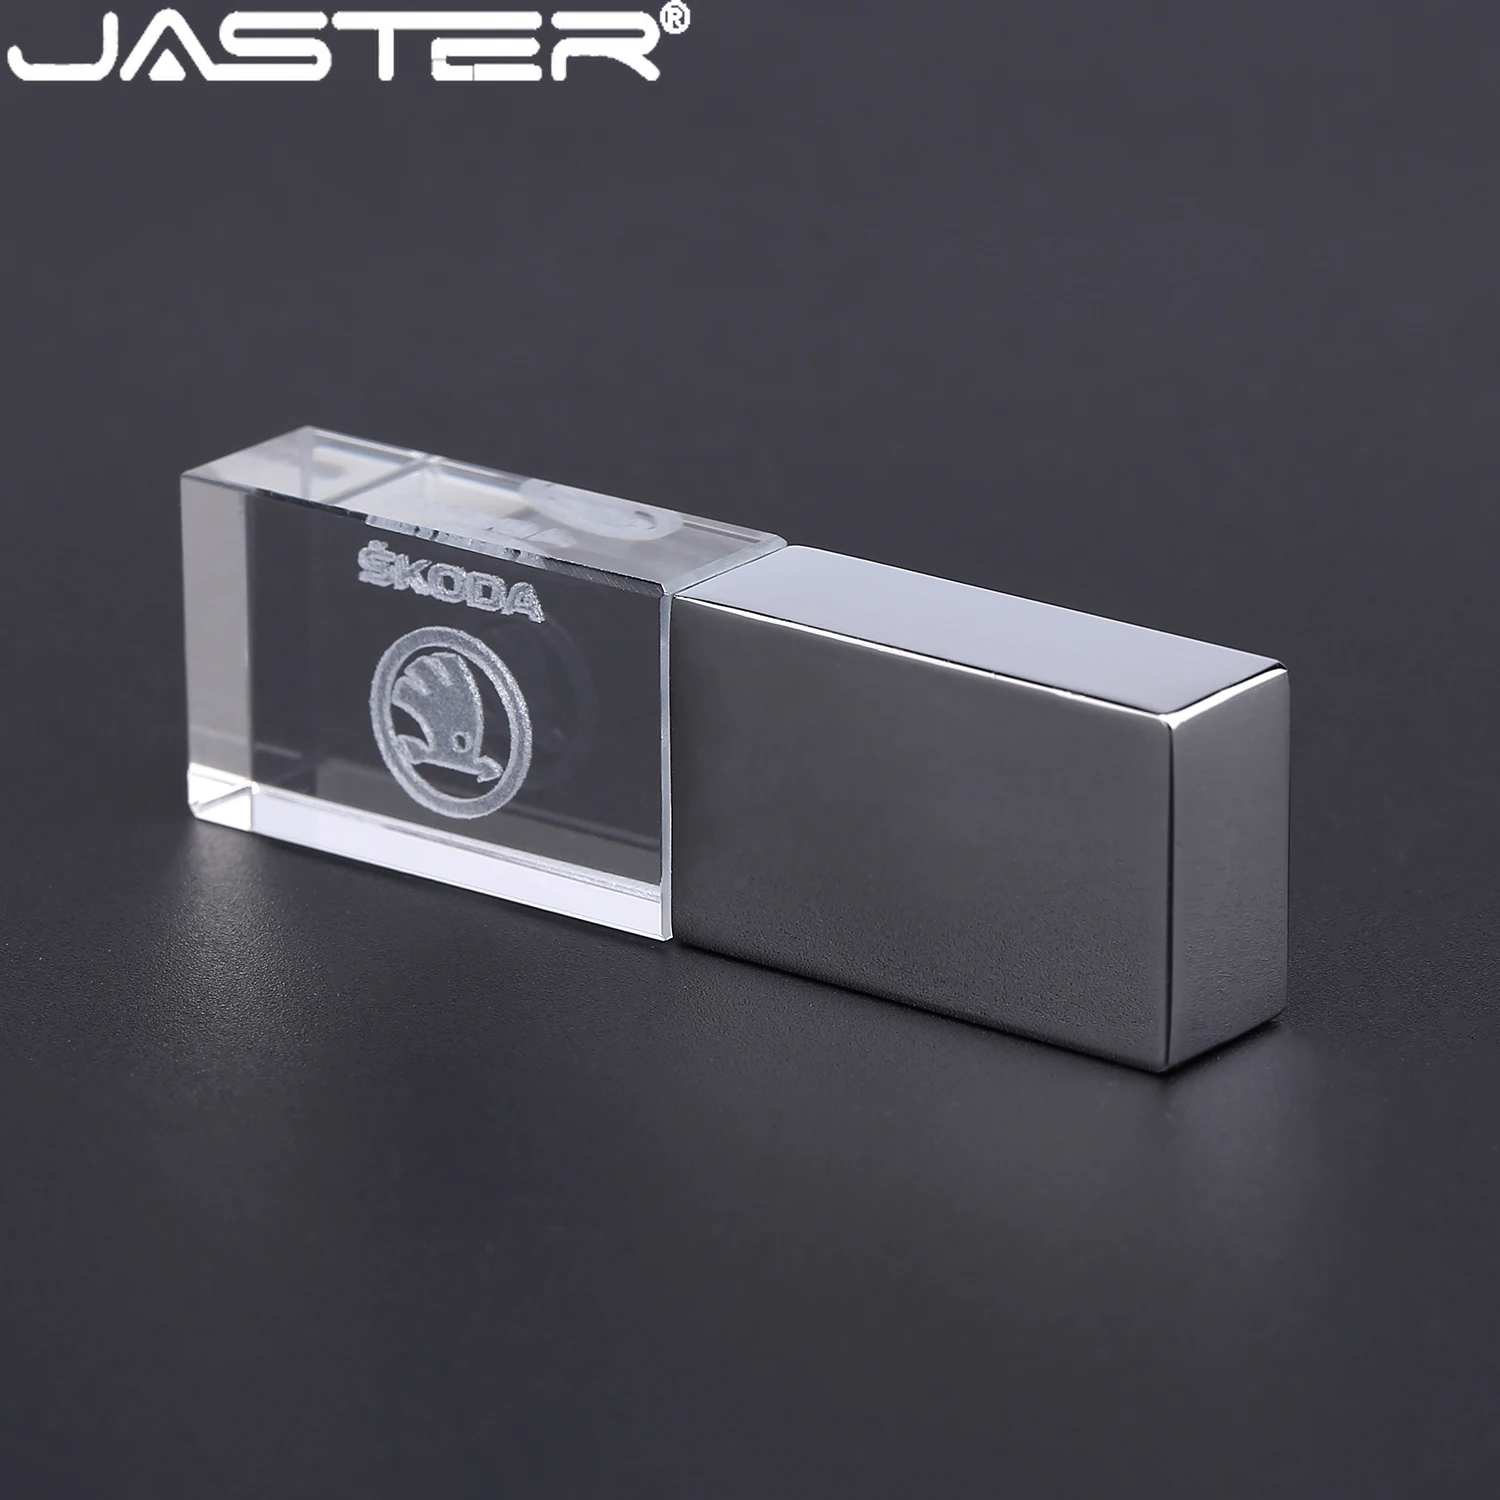 

JASTER USB flash drive usb2.0 skoda crystal metal pendrive 4GB 8GB 16GB 32GB 64GB 128GB thumb drive memory stick u disk